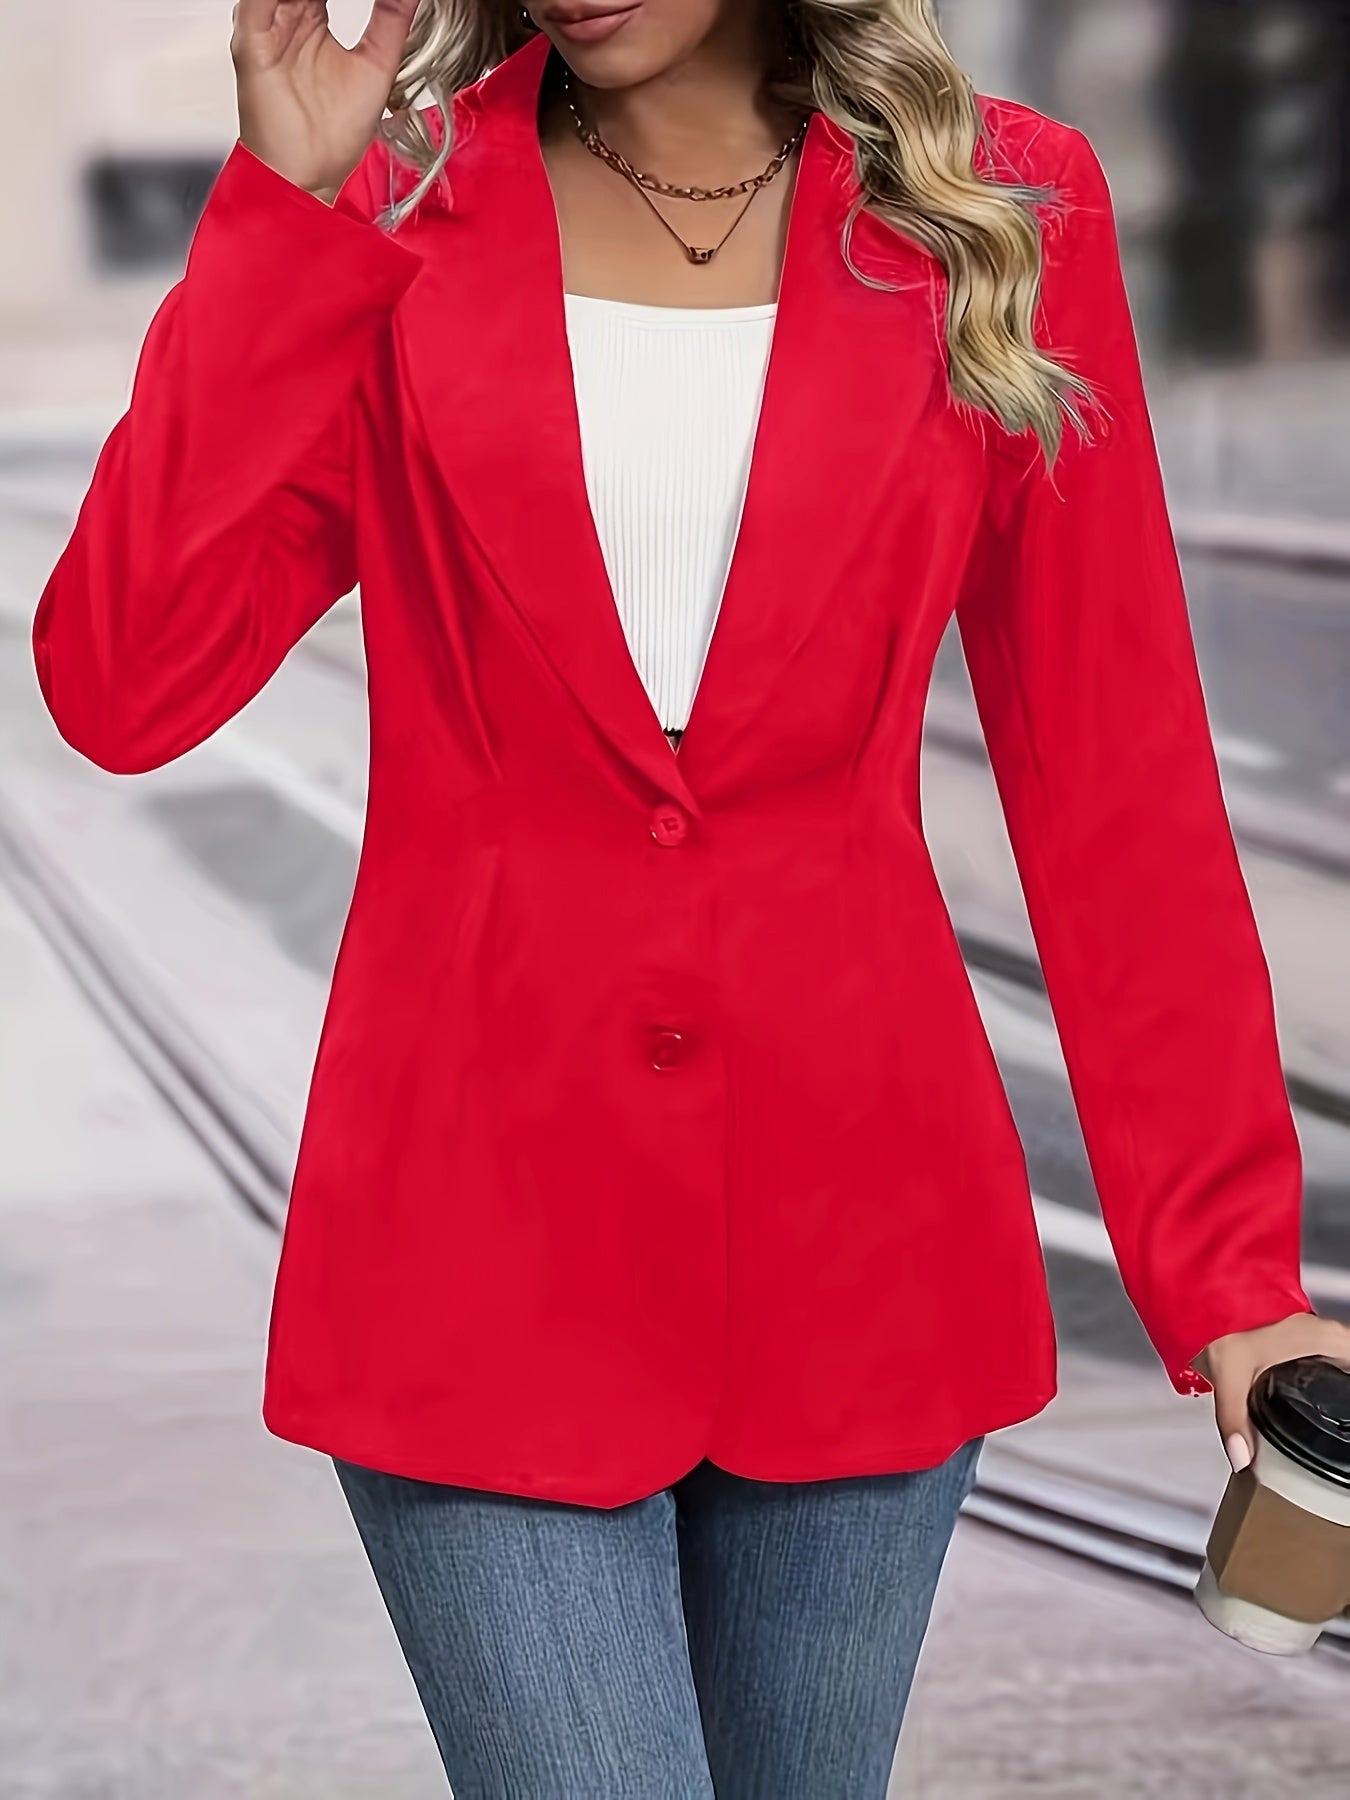 Single Breasted Lapel Blazer, Elegant Solid Long Sleeve Work Office Outerwear, Women's Clothing